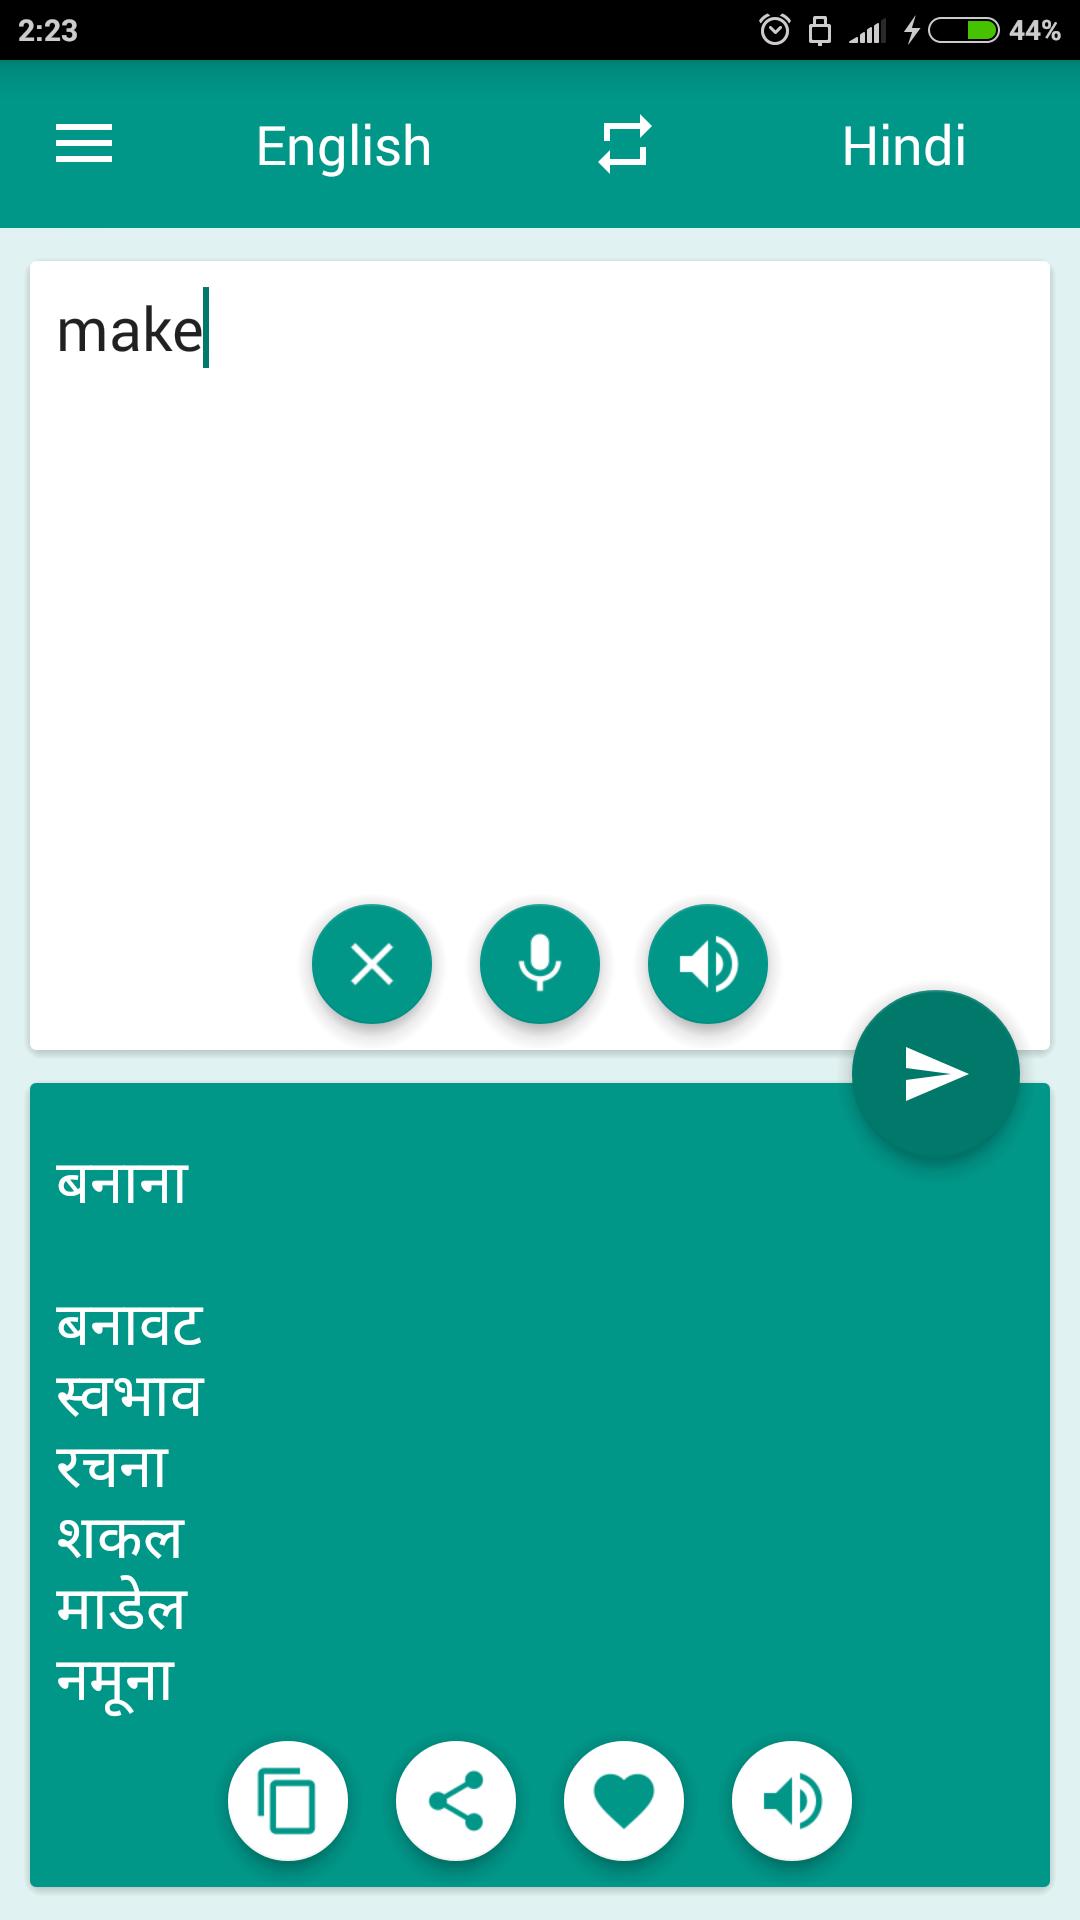 Hindi-English Translator for Android - APK Download